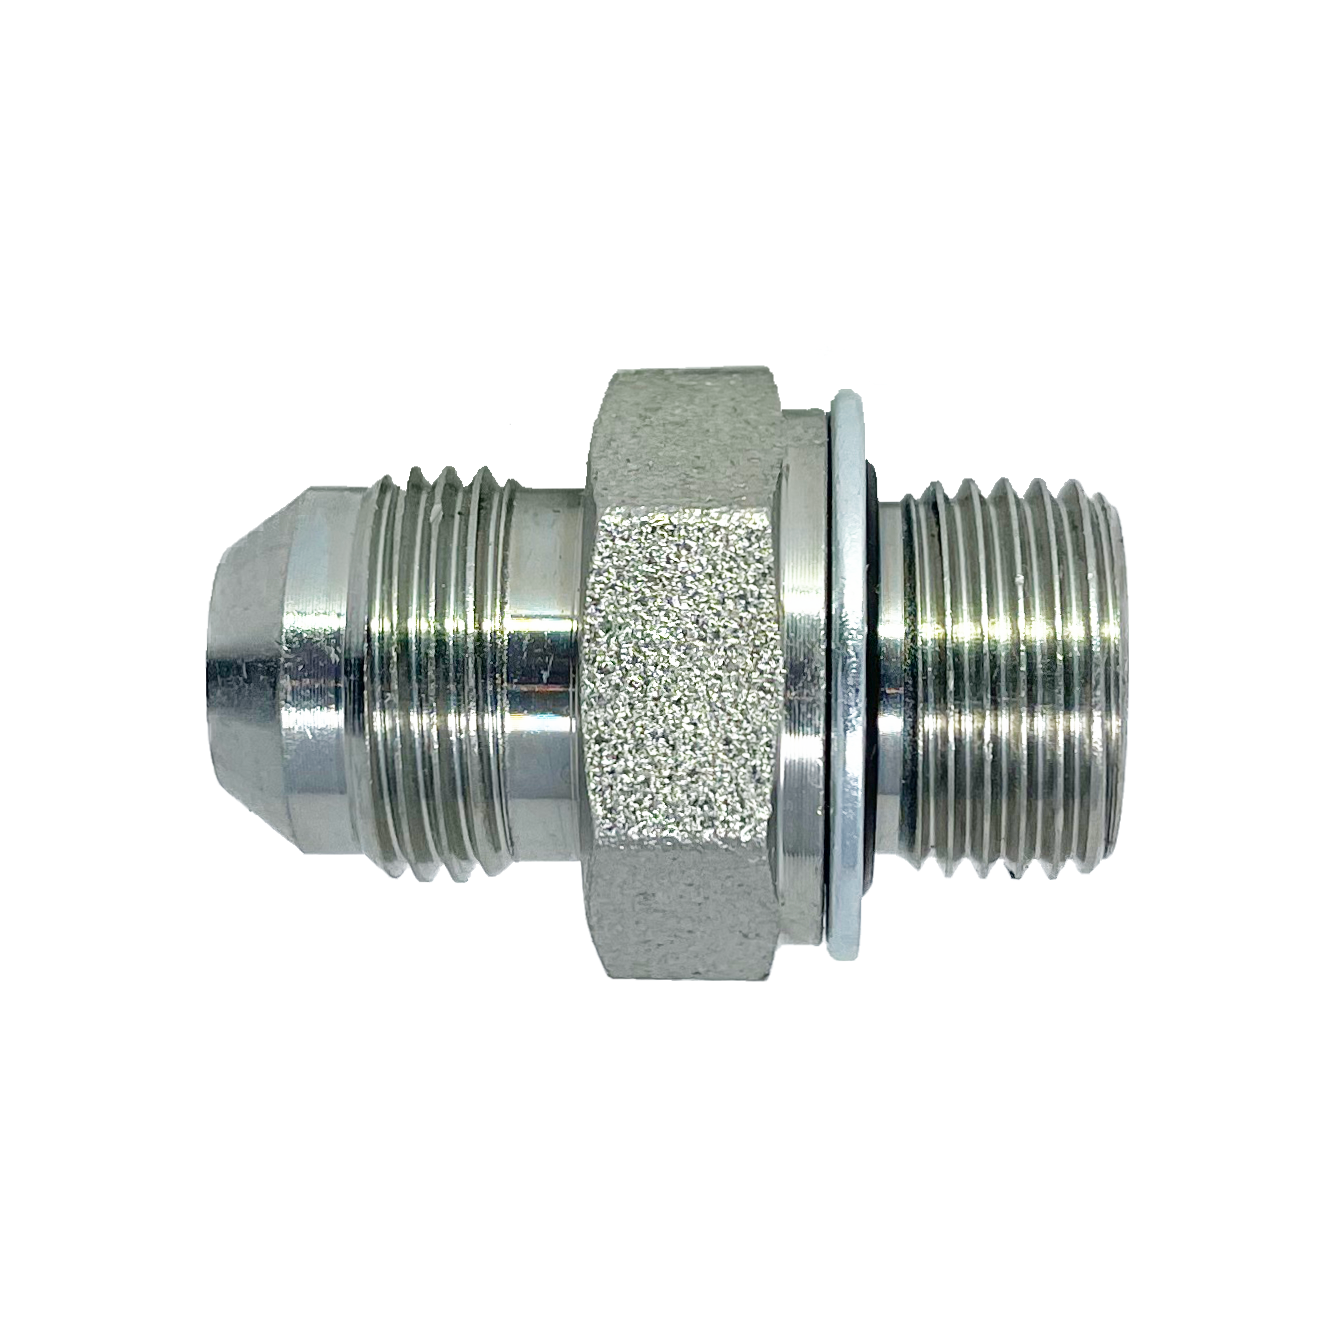 9606S-04-S08-16 : Adaptall Straight Adapter, Male 0.25 (1/4") JIC x Male S08 DIN Tube, Carbon Steel, Heavy Duty